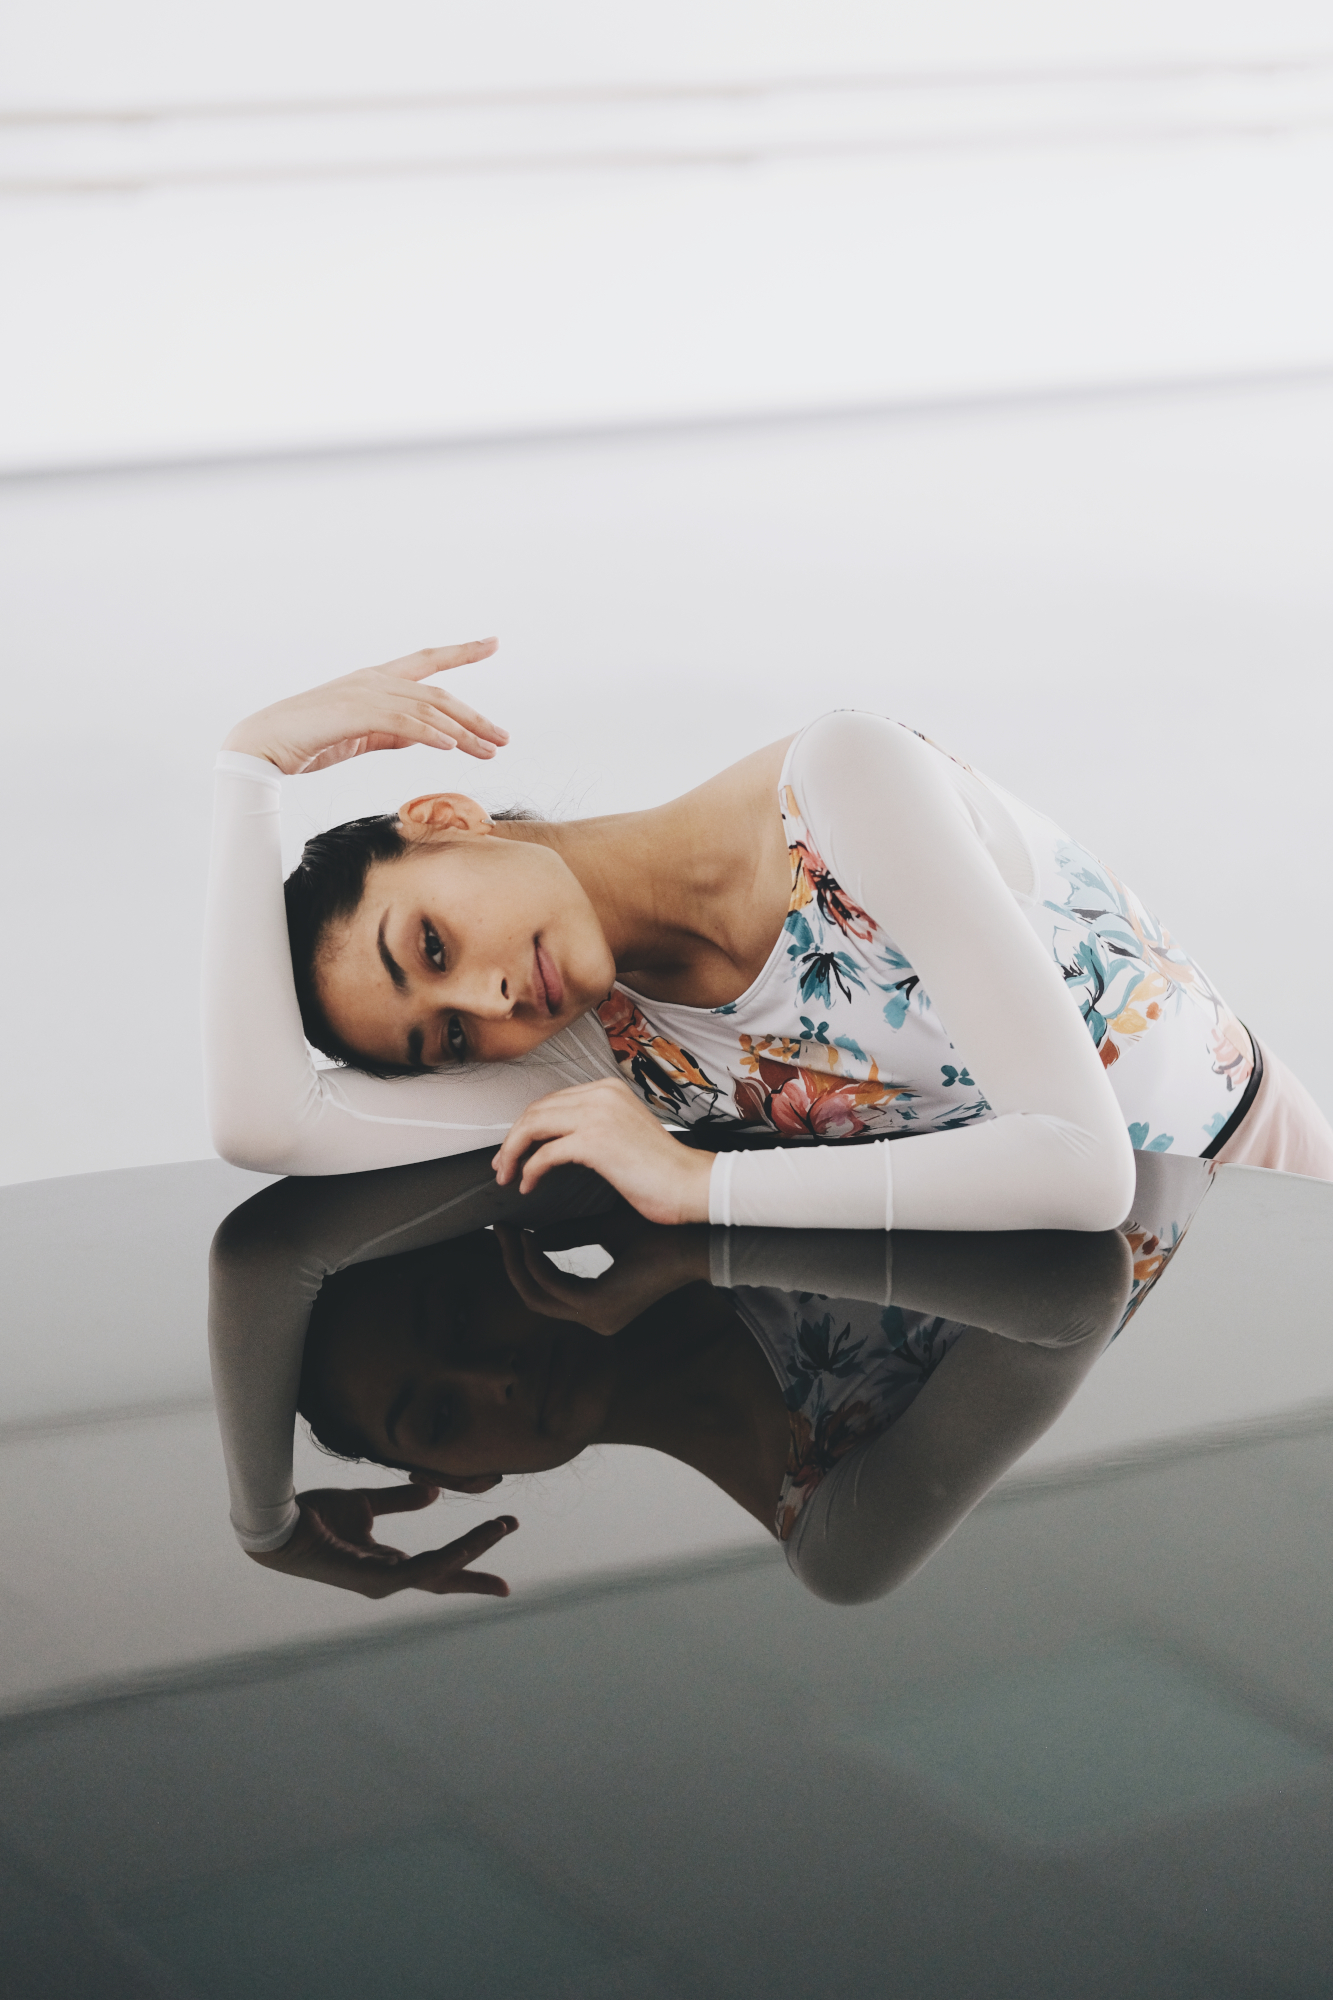 Fotoshooting im Balletstudio © Carolin Thiergart